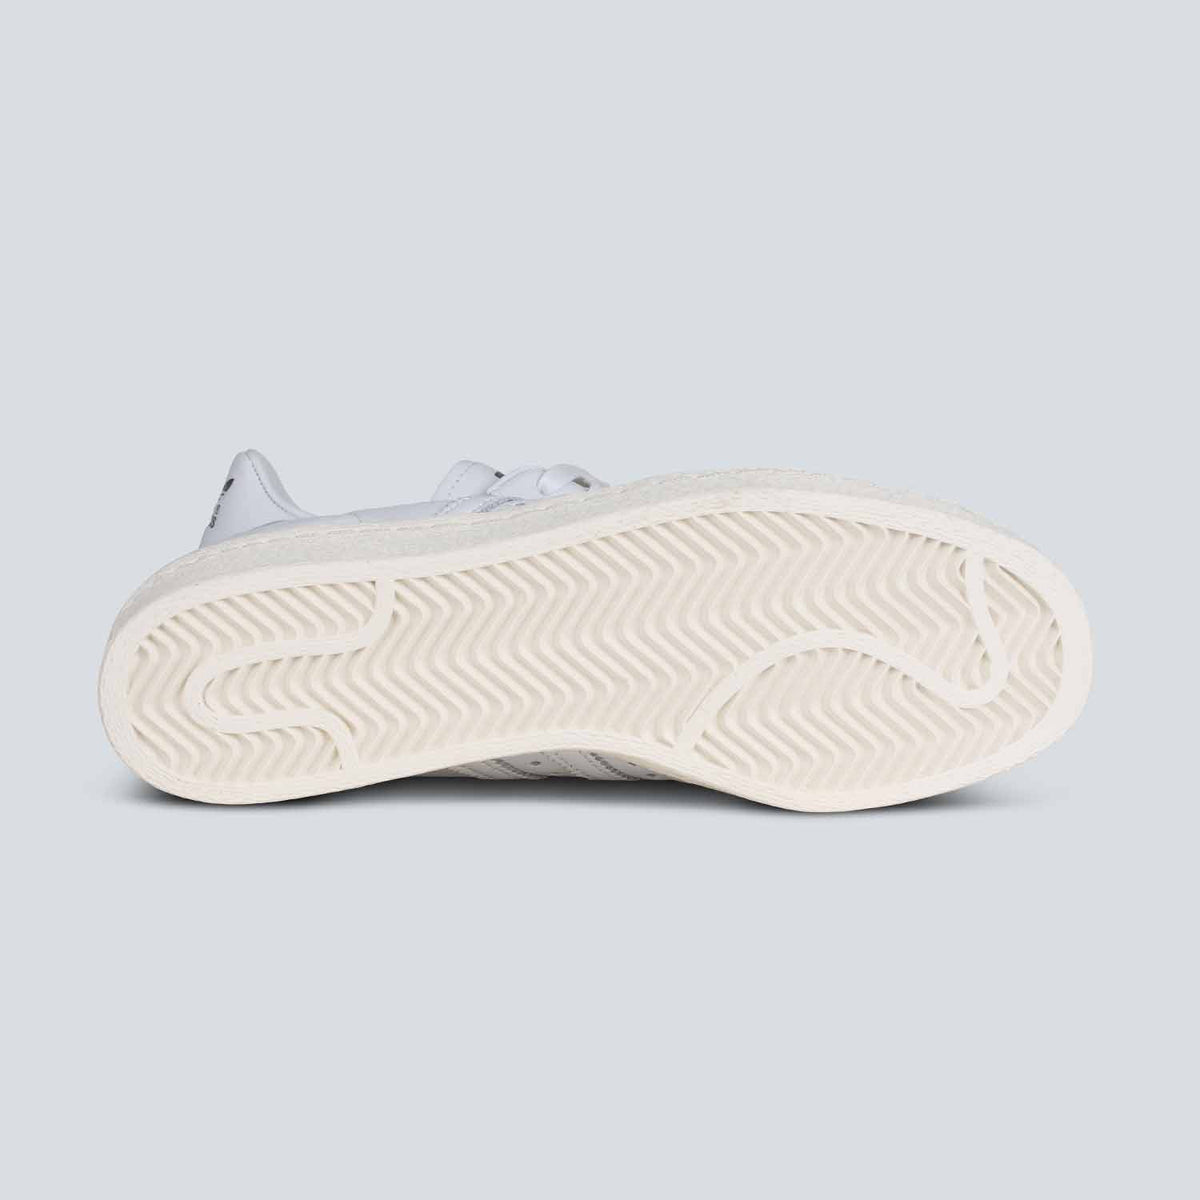 Adidas - Superstar 80's DLX - White/White/Cream White